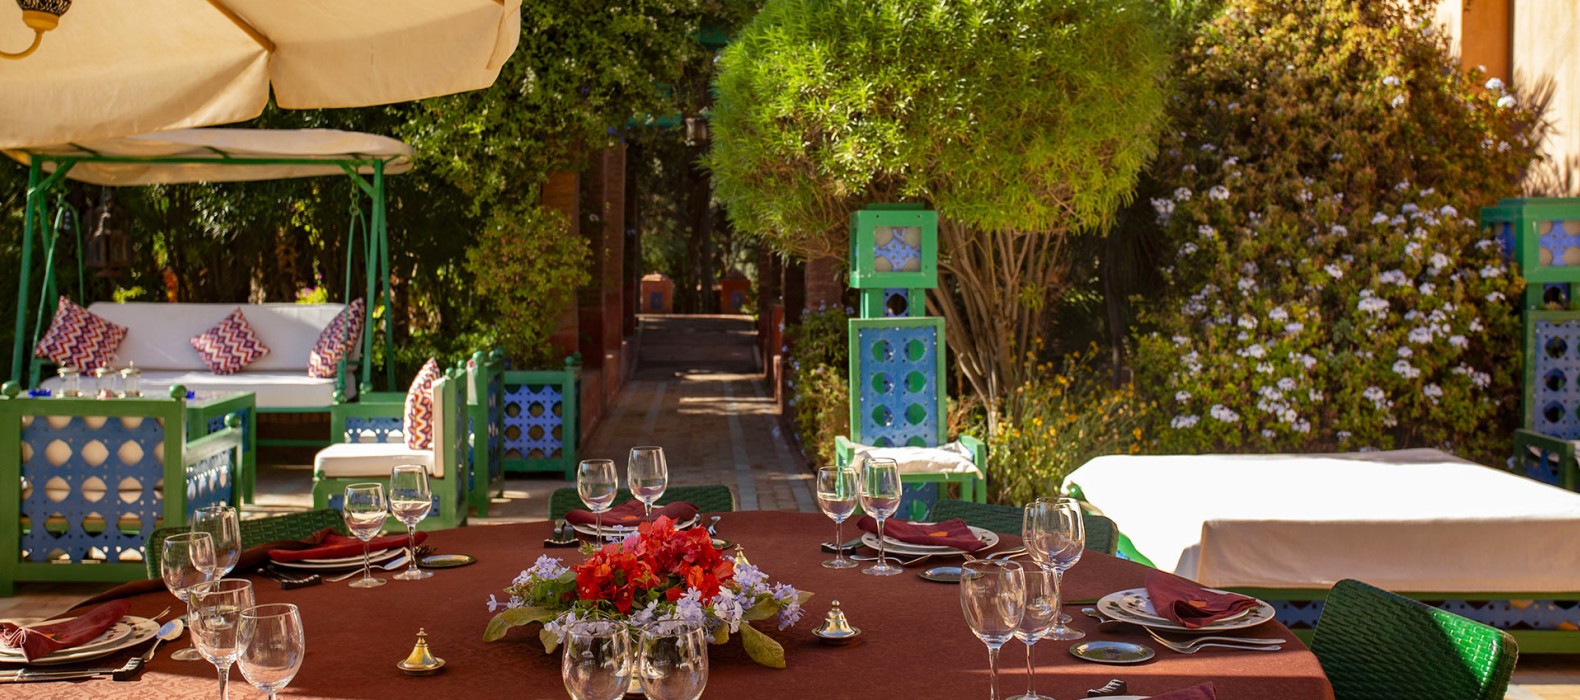 Dining area view of Villa Petite Majorelle in Marrakech